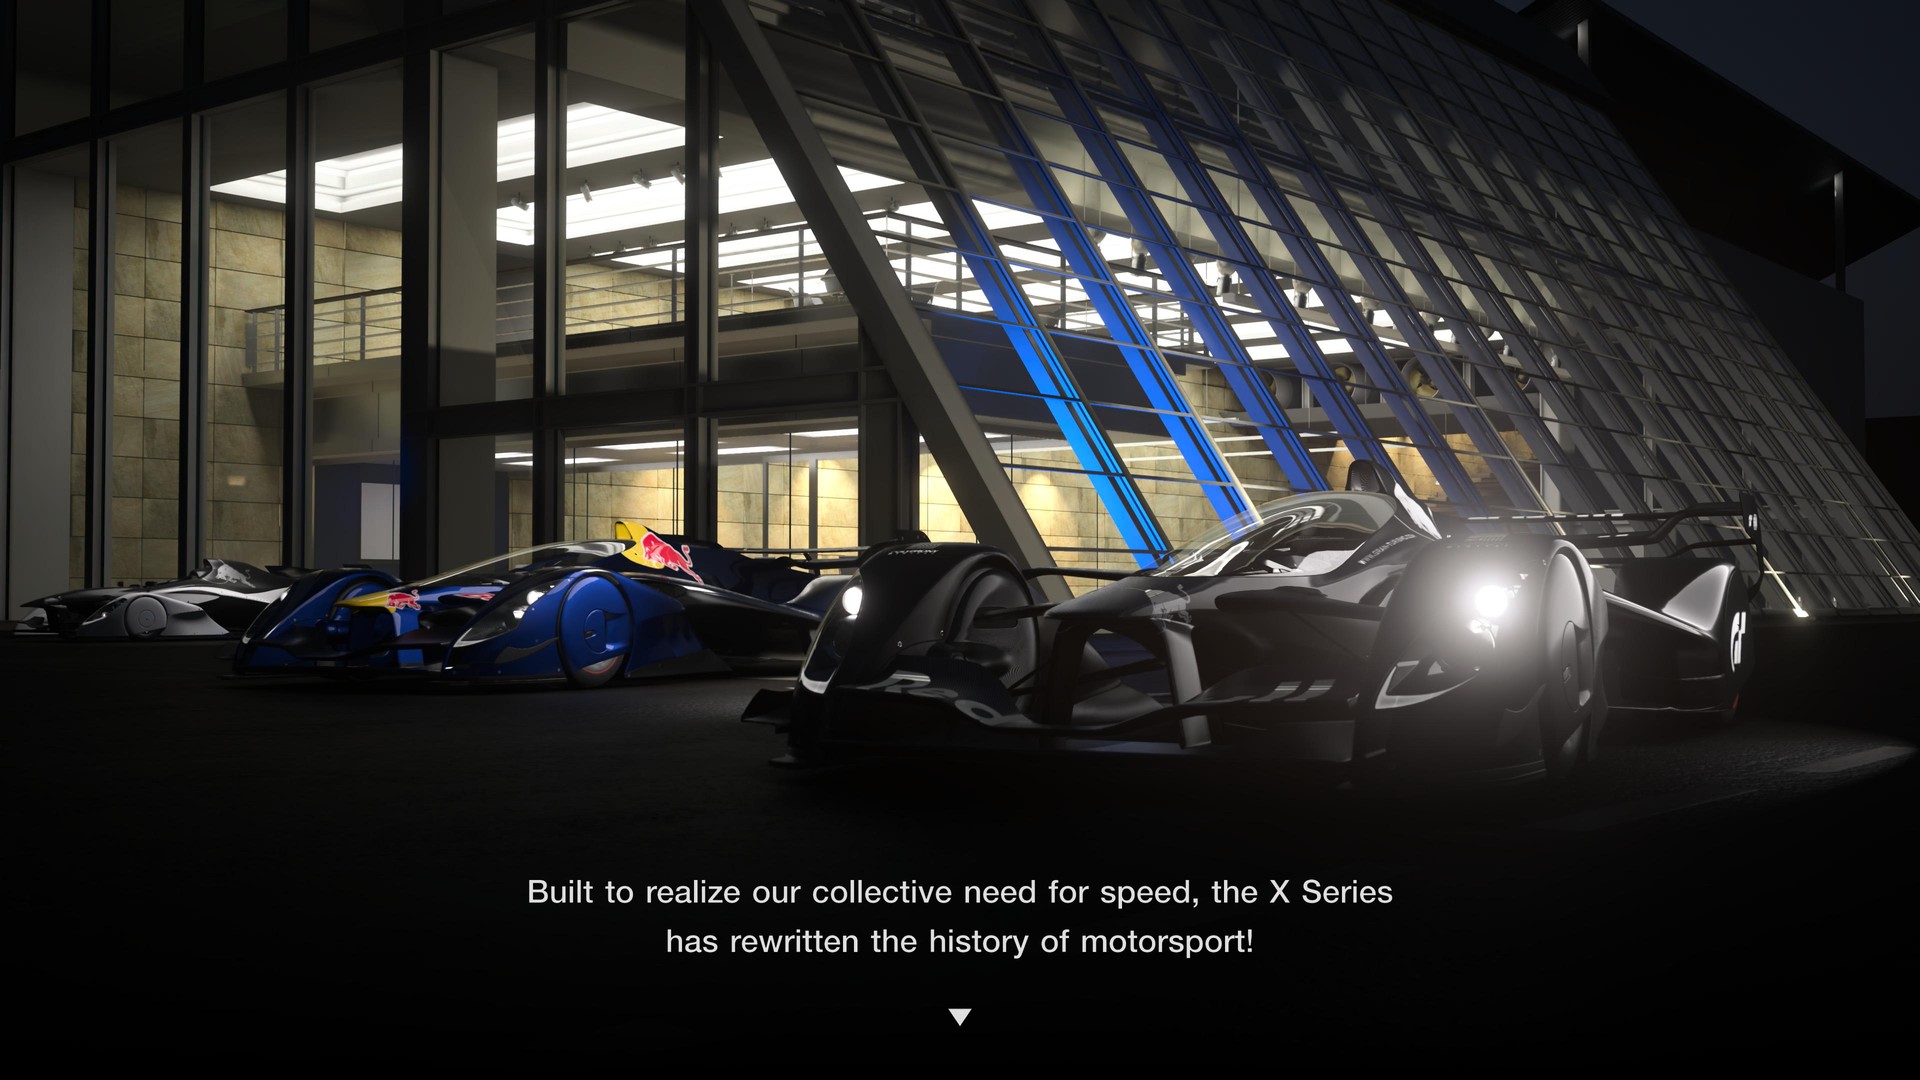 Gran Turismo 7 just got a game-changing AI update